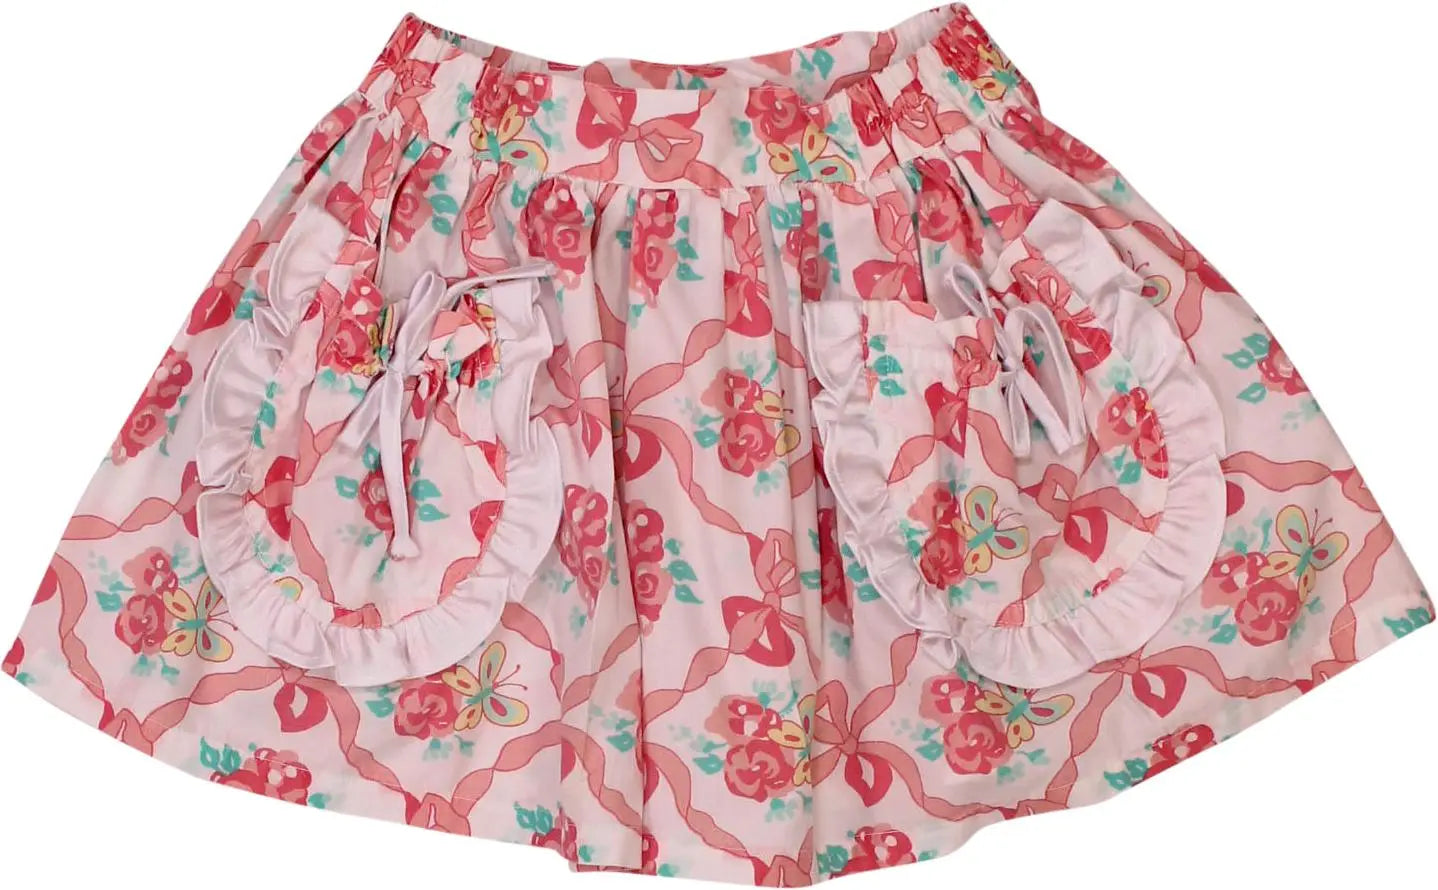 Kiko - Mini Skirt- ThriftTale.com - Vintage and second handclothing